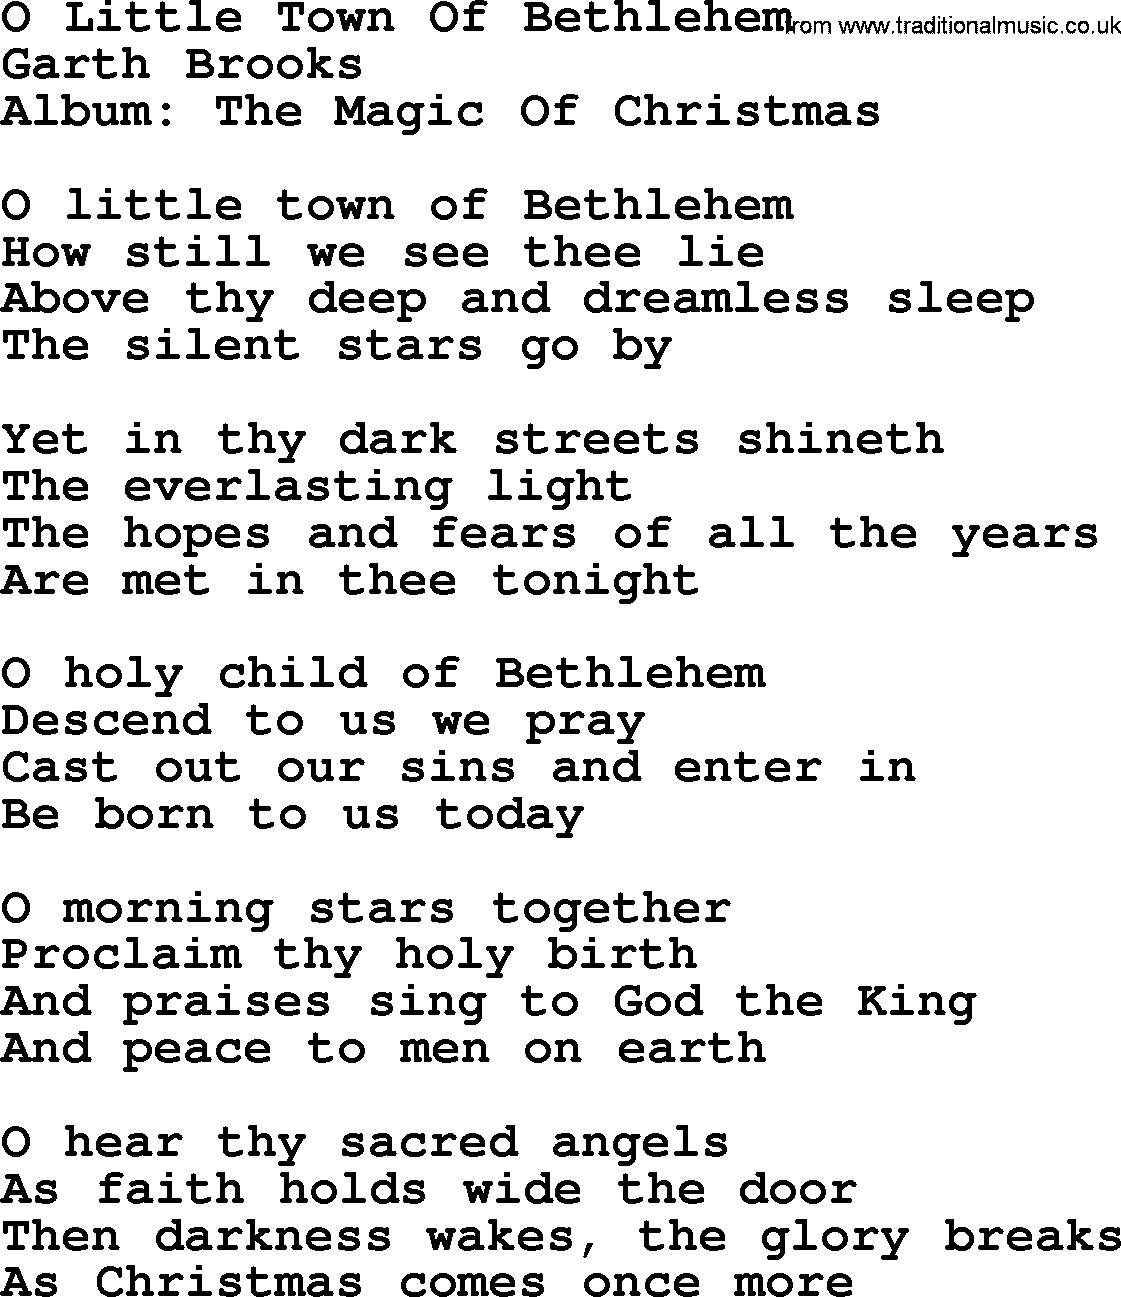 O Little Town Of Bethlehem, by Garth Brooks - lyrics